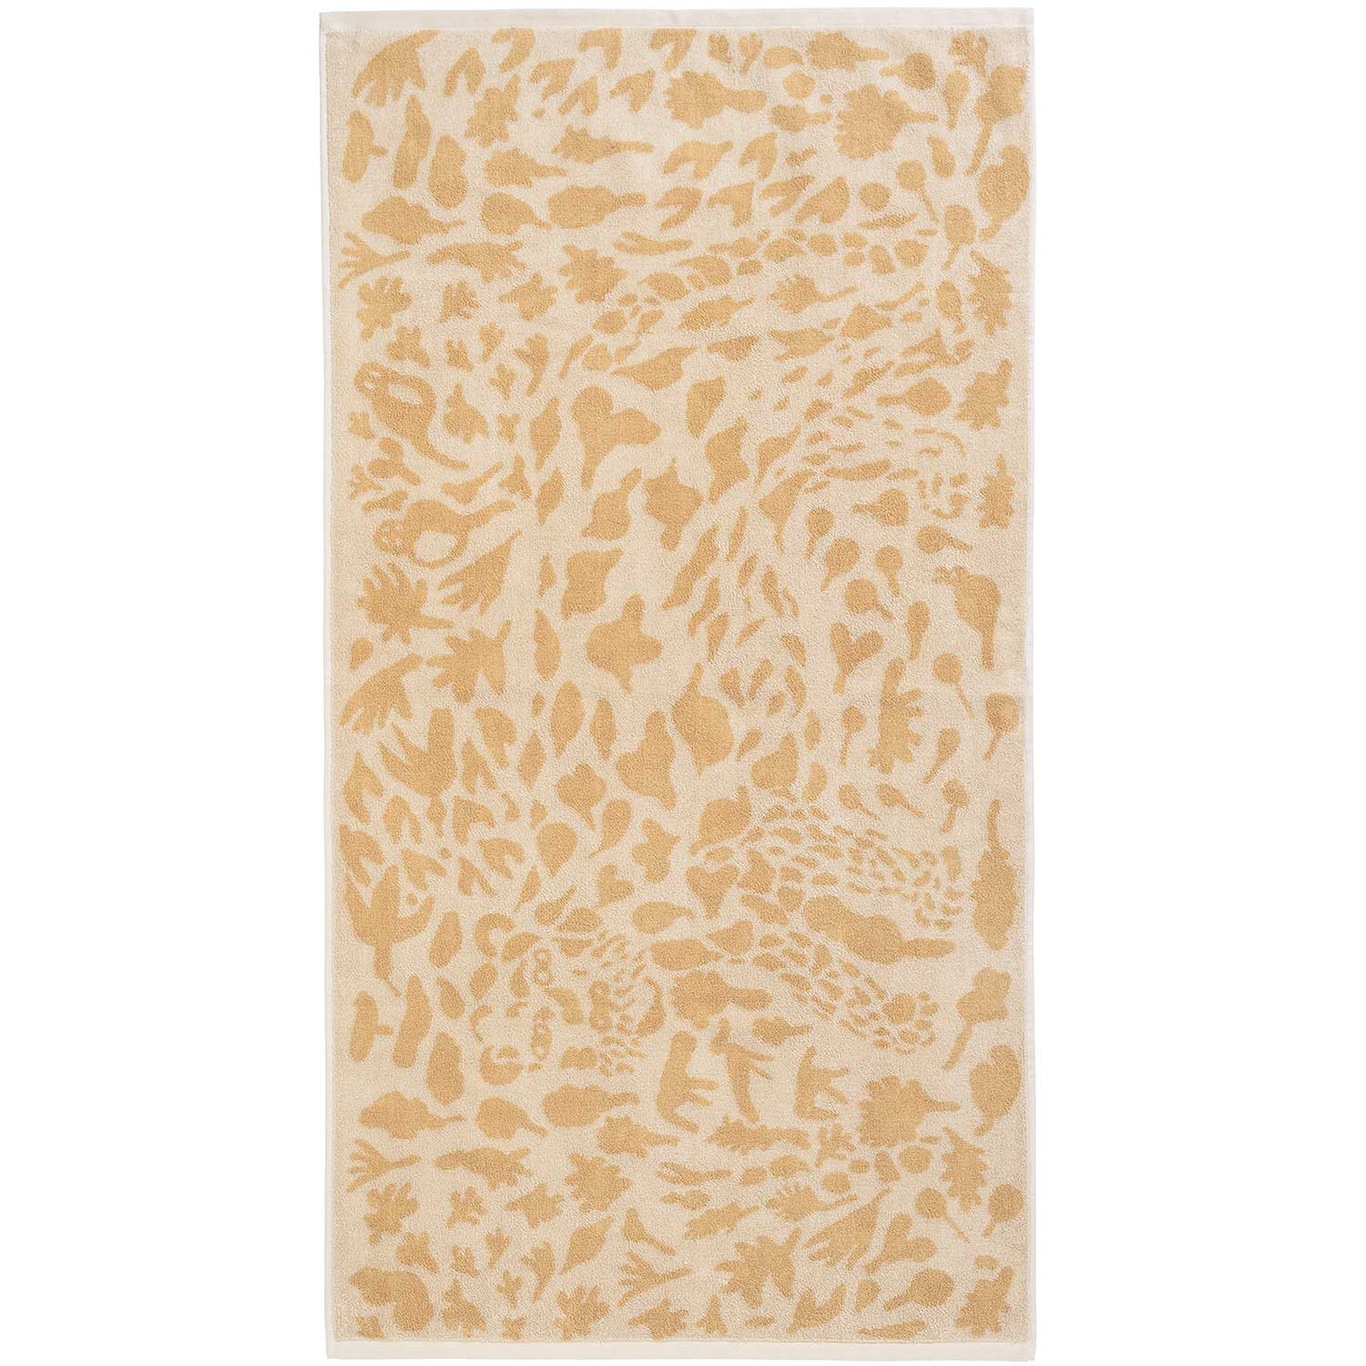 Oiva Toikka Collection Håndkle, 70x140 cm, Cheetah Brown